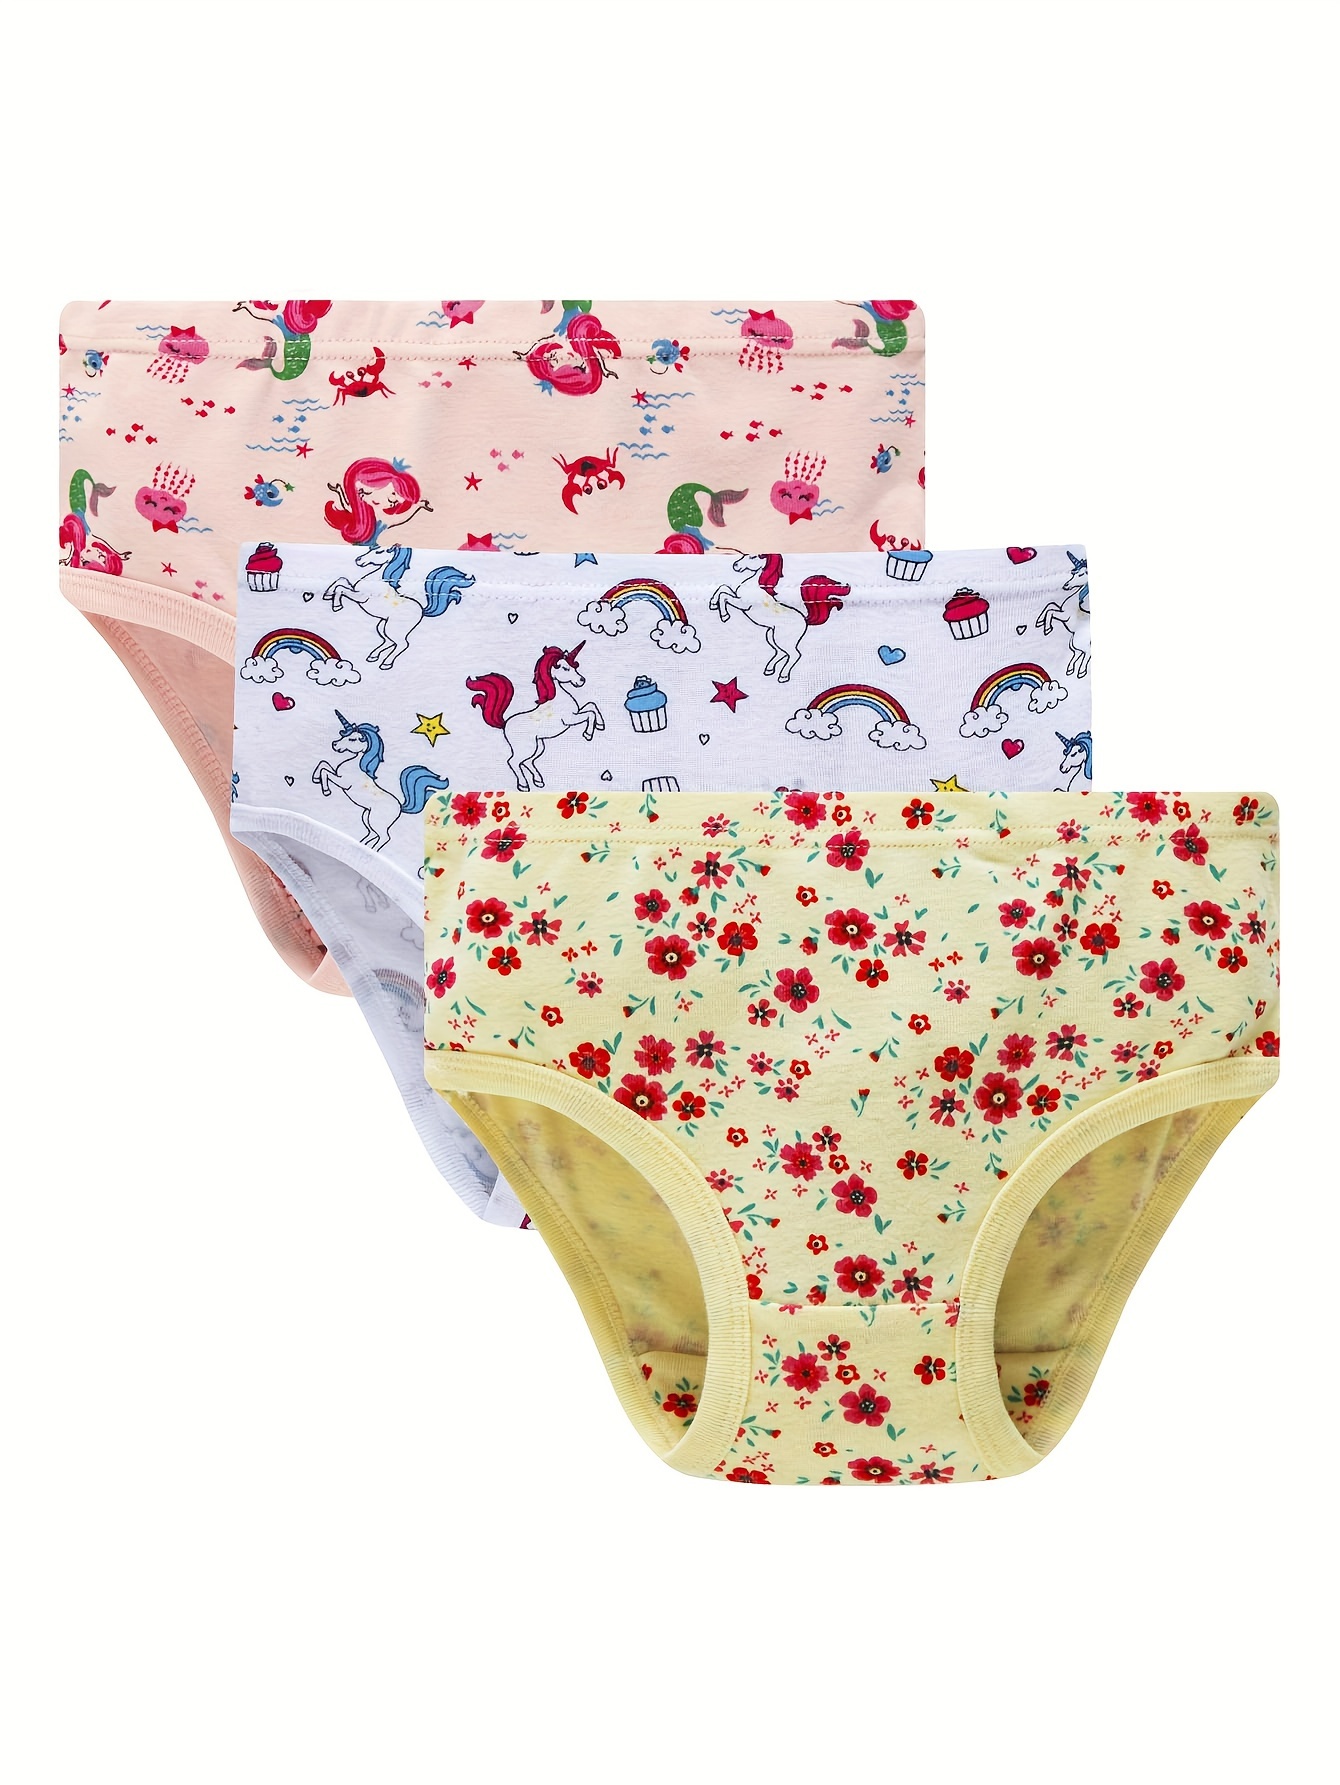 Little Girls Underwear Set of 4 Prints Soft Panties Toddler to Big